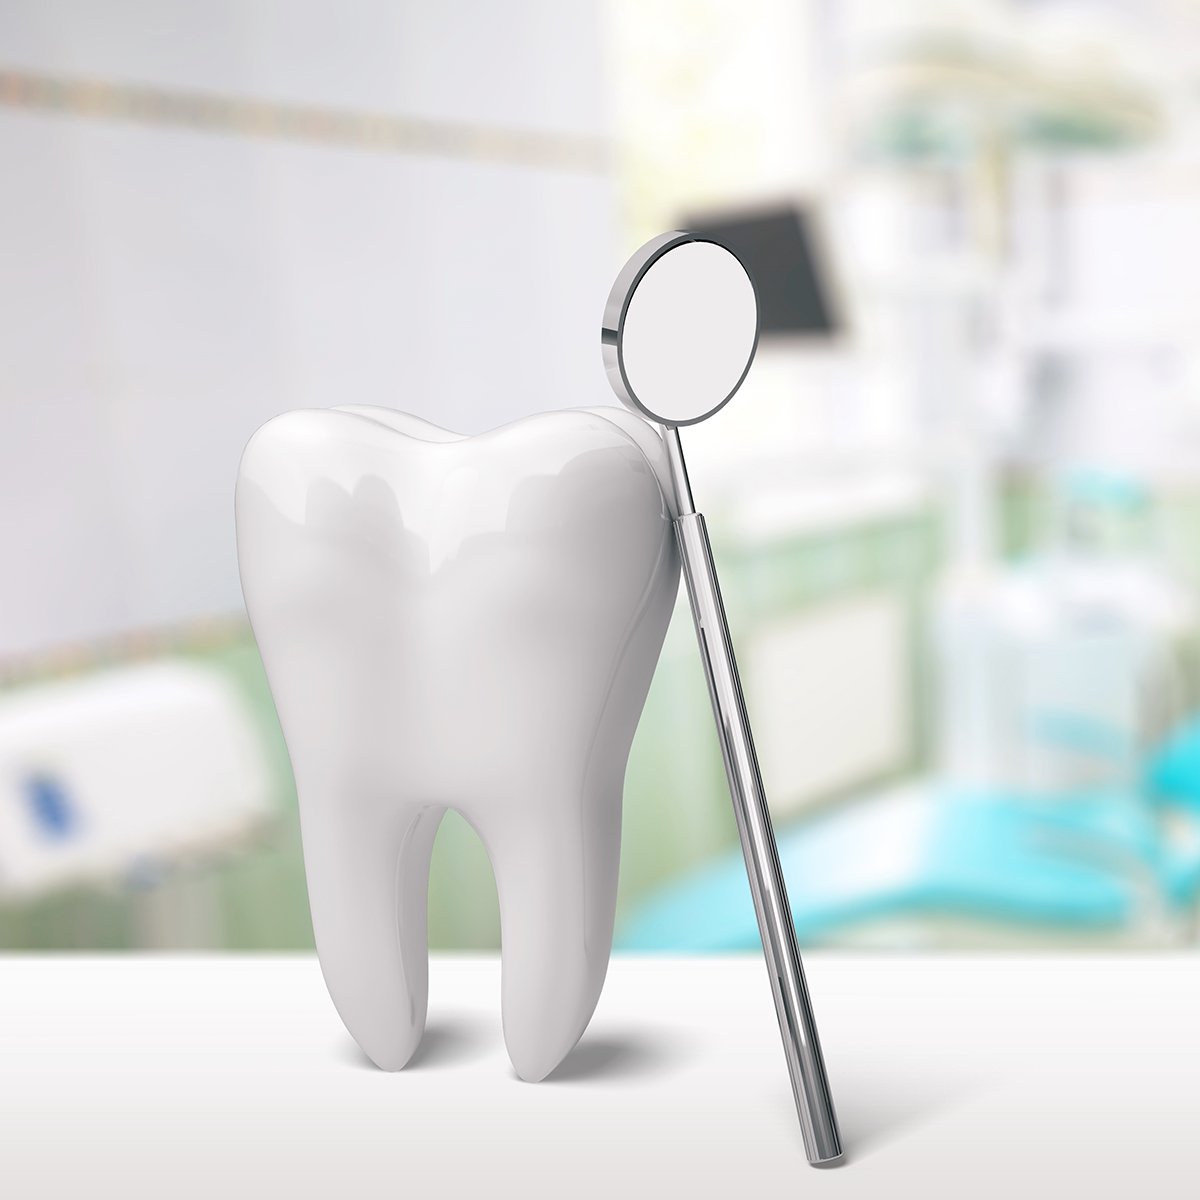 Реклама стоматологии картинки